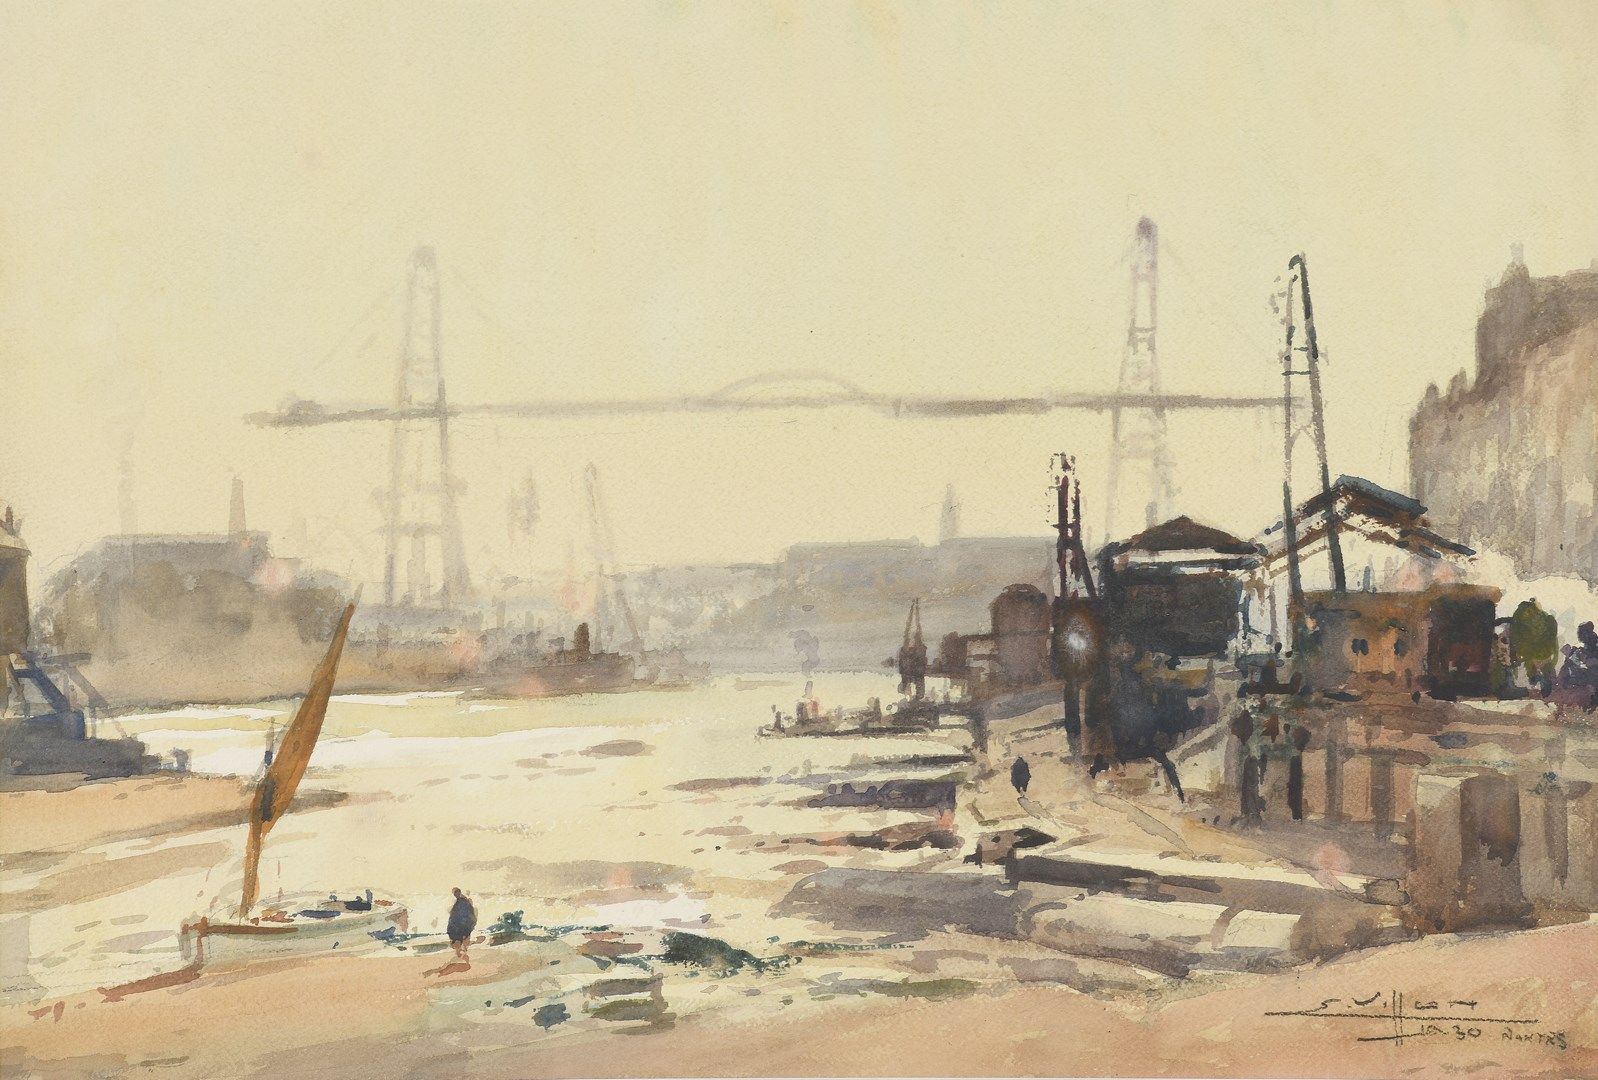 Null 维龙-尤金，1879-1951年

南特港，运输机桥，1930年

水彩画和水粉画（小模具）

右下角有签名、位置和日期，装裱的背面有工作室印章

3&hellip;